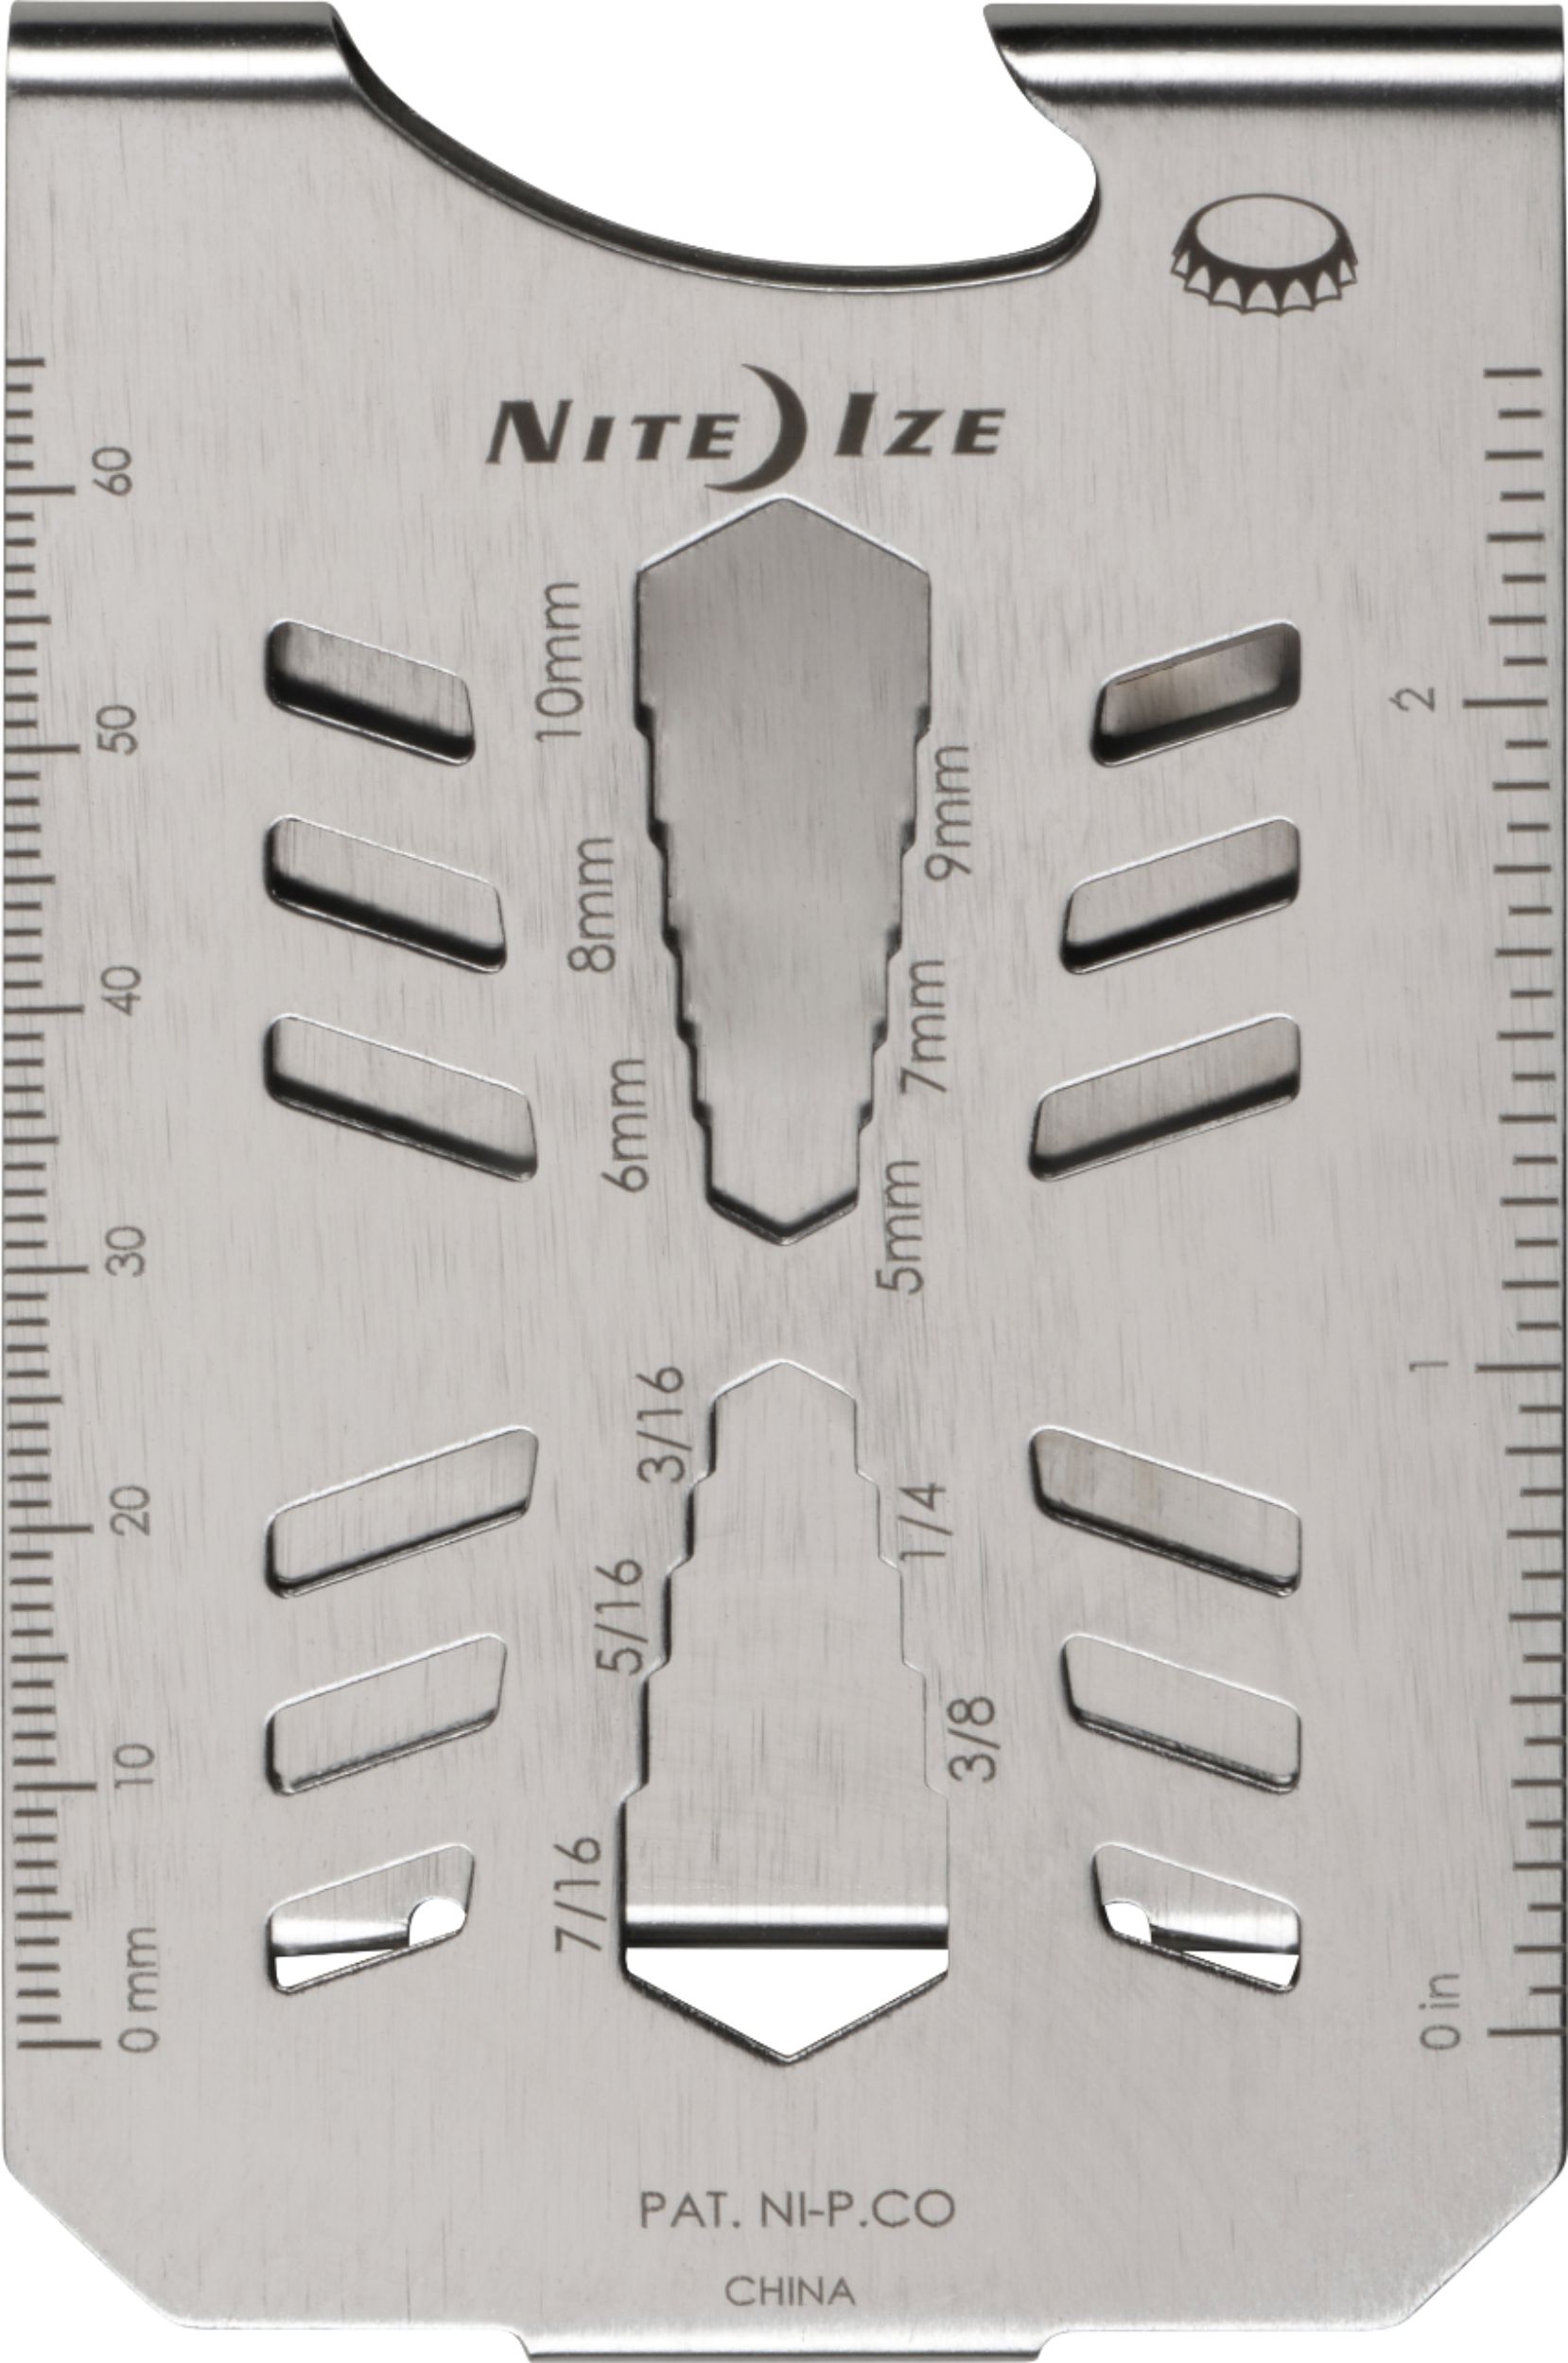 Angle View: Nite Ize - Inka Key Chain Pen - Charcoal